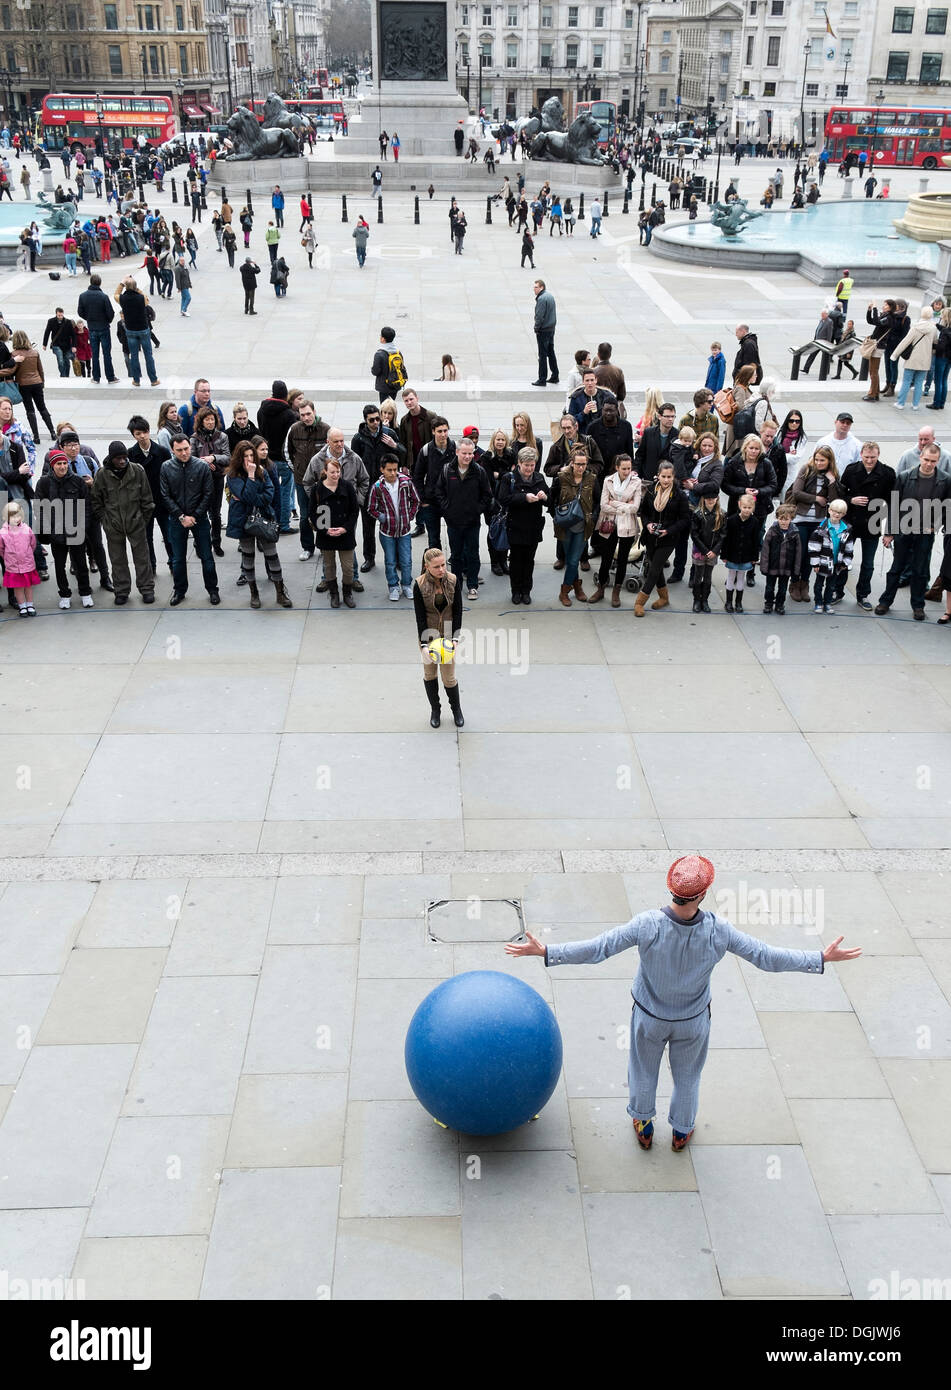 A street performer entertaining people in Trafalgar Square in London. Stock Photo